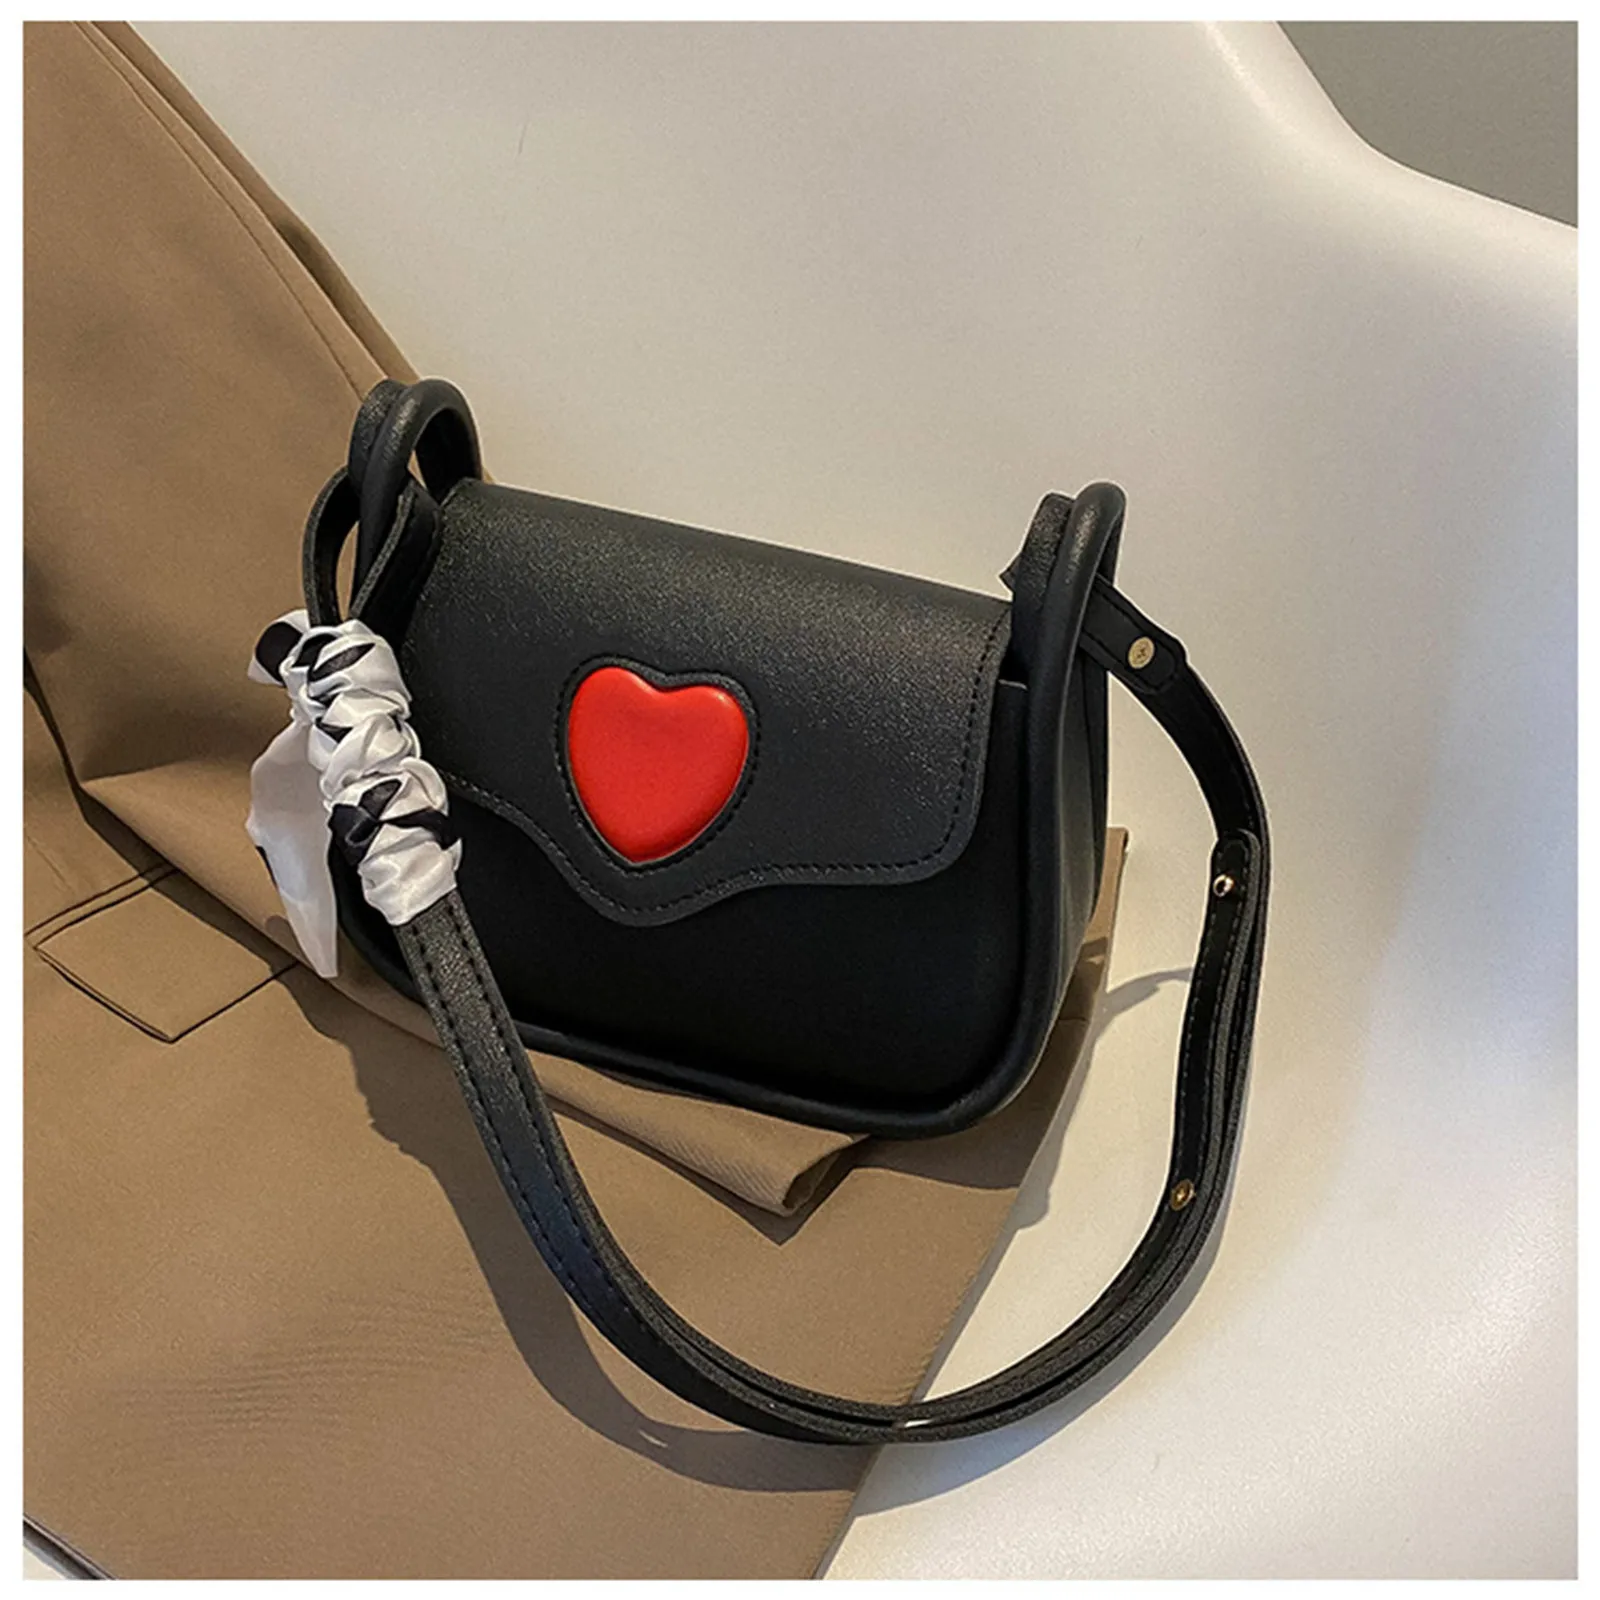 Fashionable Pink Love Retro Saddle Bag Niche Design Shoulder Bag Versati... - $17.99